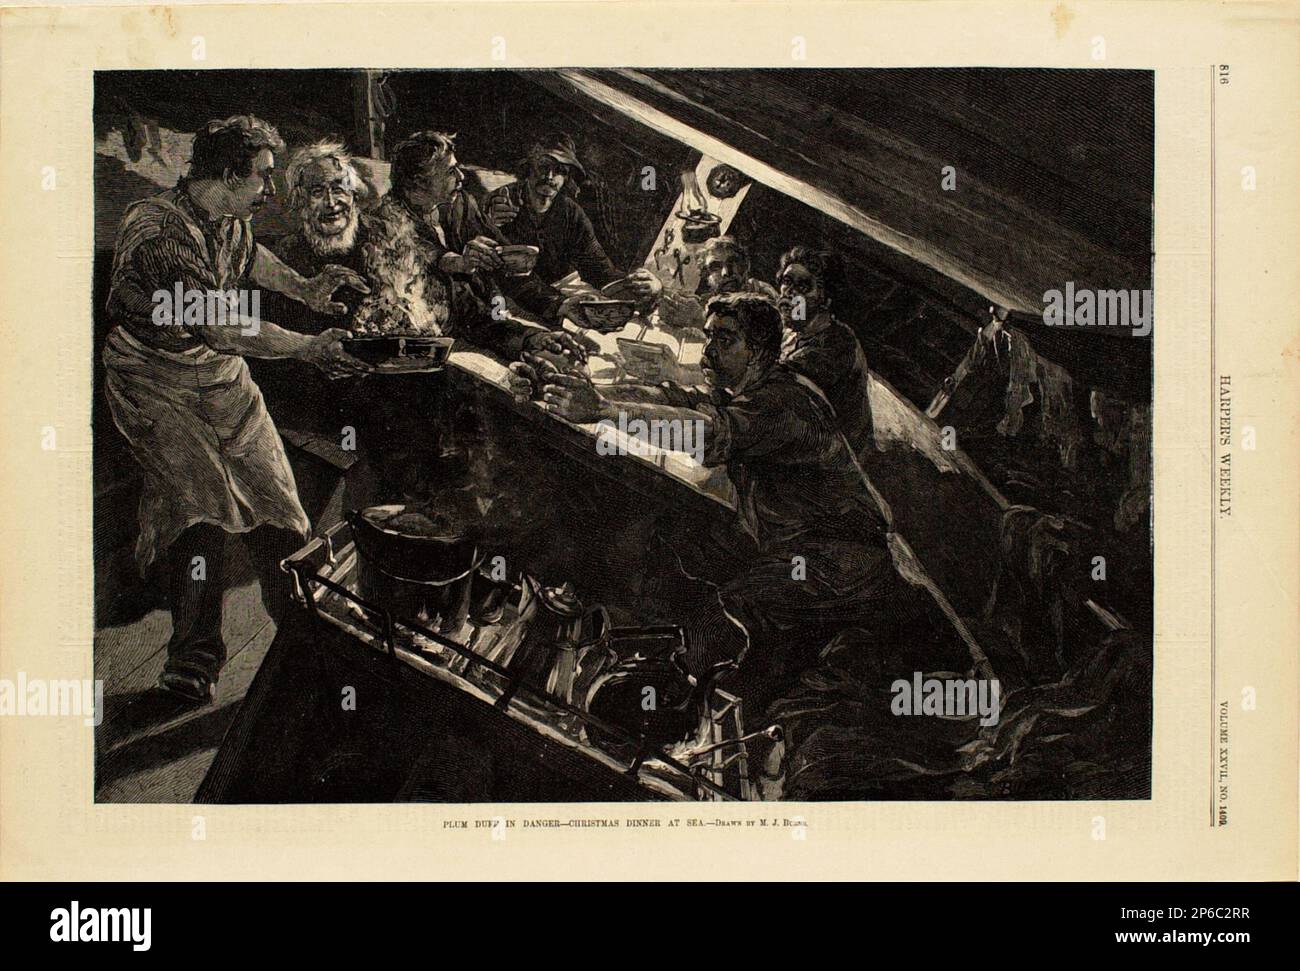 Milton J. Burns, Plum Duff in Danger – Christmas Dinner at Sea, 1883, Holzgravierung auf Papier. Stockfoto